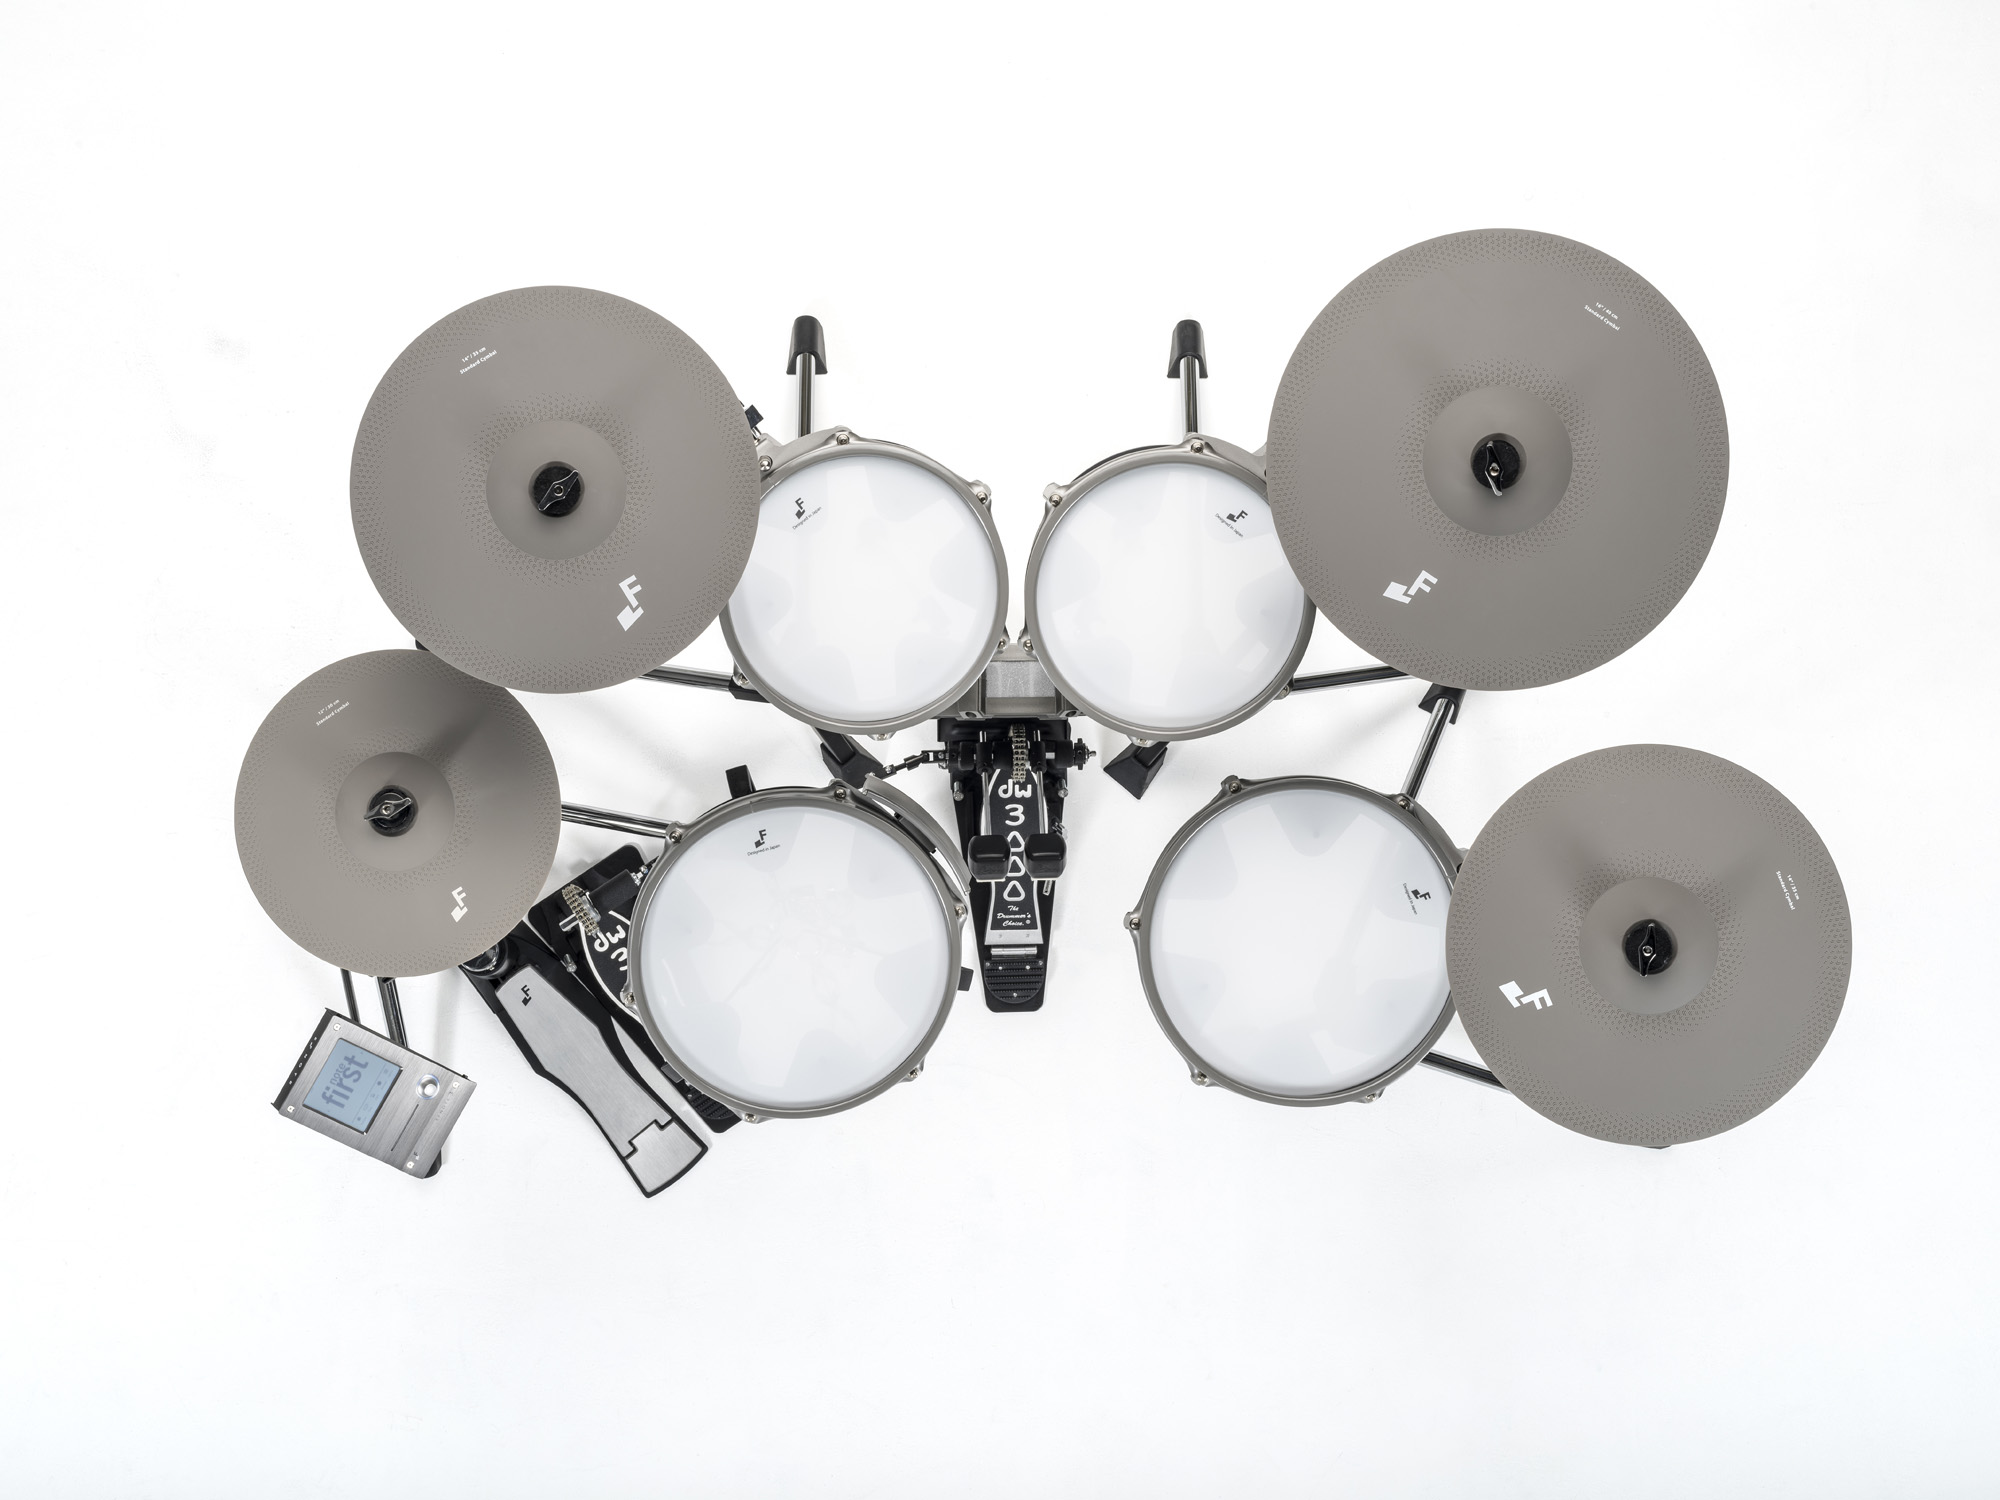 Efnote Efd3 Drum Kit - Komplett E-Drum Set - Variation 3